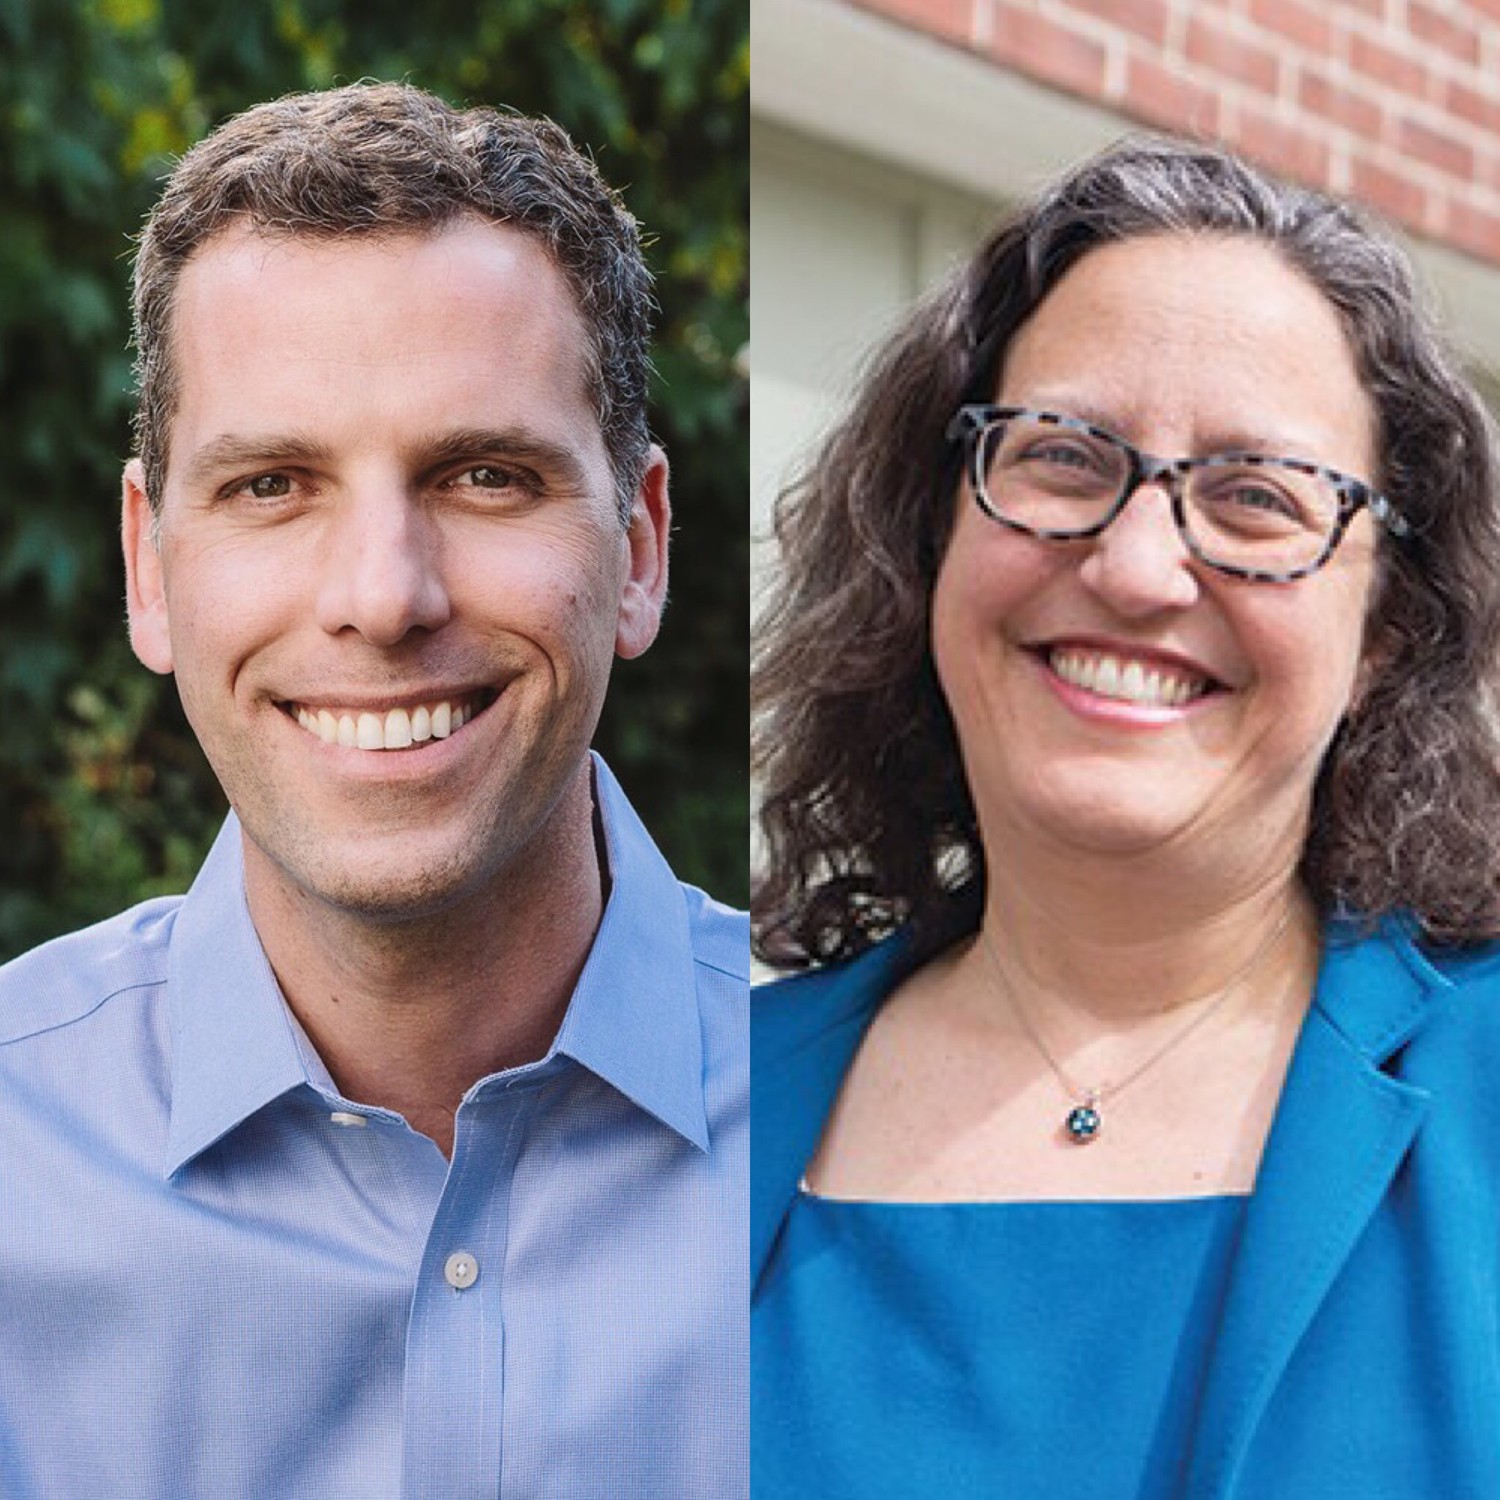 Meet the Candidates - Mark Tracy and Rebecca Kislak